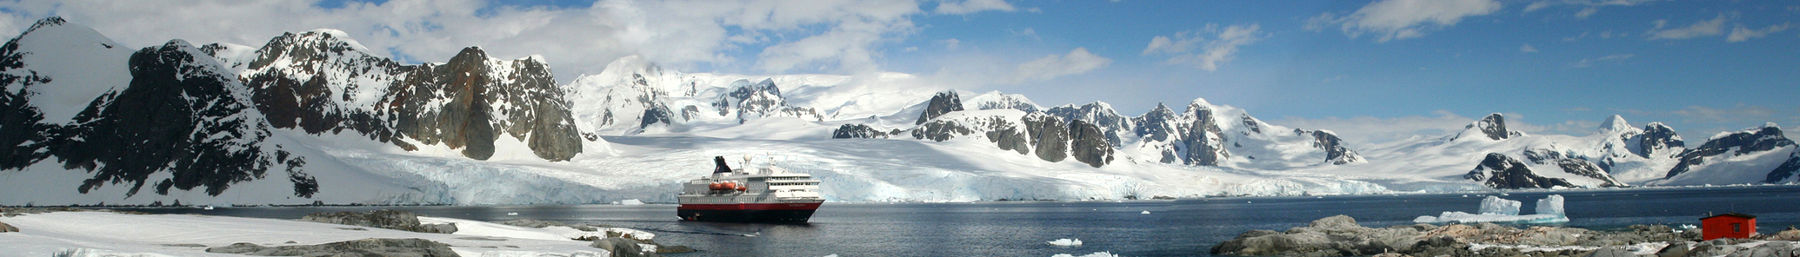 Półwysep Antarktyczny-banner.jpg